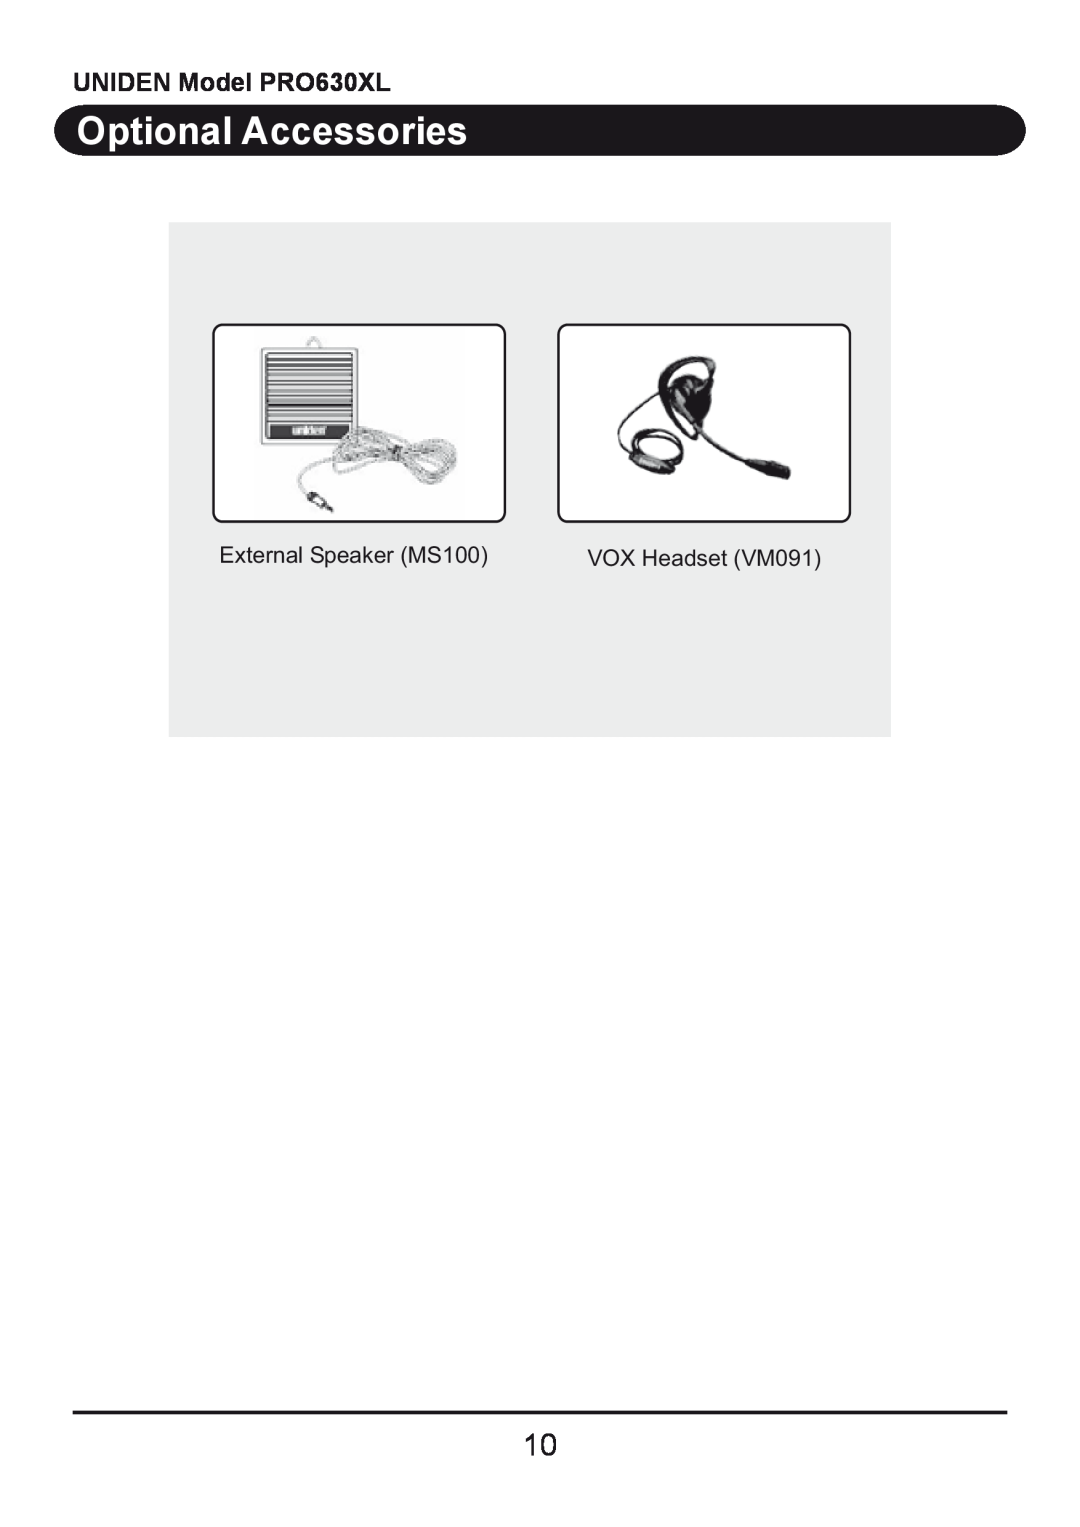 Uniden owner manual Optional Accessories, UNIDEN Model PRO630XL, External Speaker MS100, VOX Headset VM091 